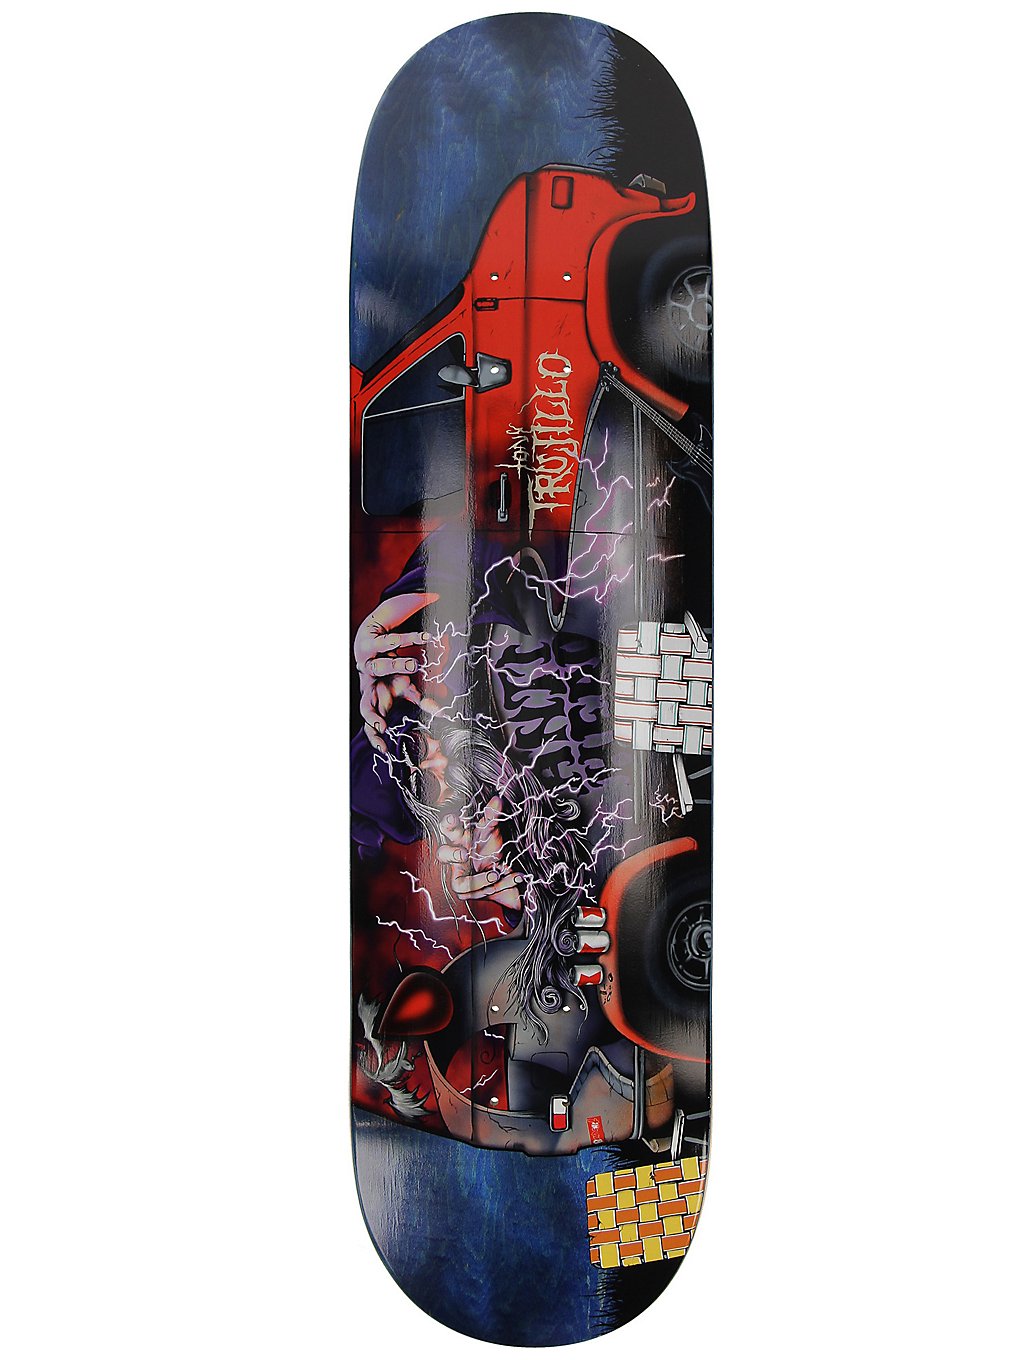 Antihero trujillo vanatics 8.25 skateboard deck kuviotu, antihero